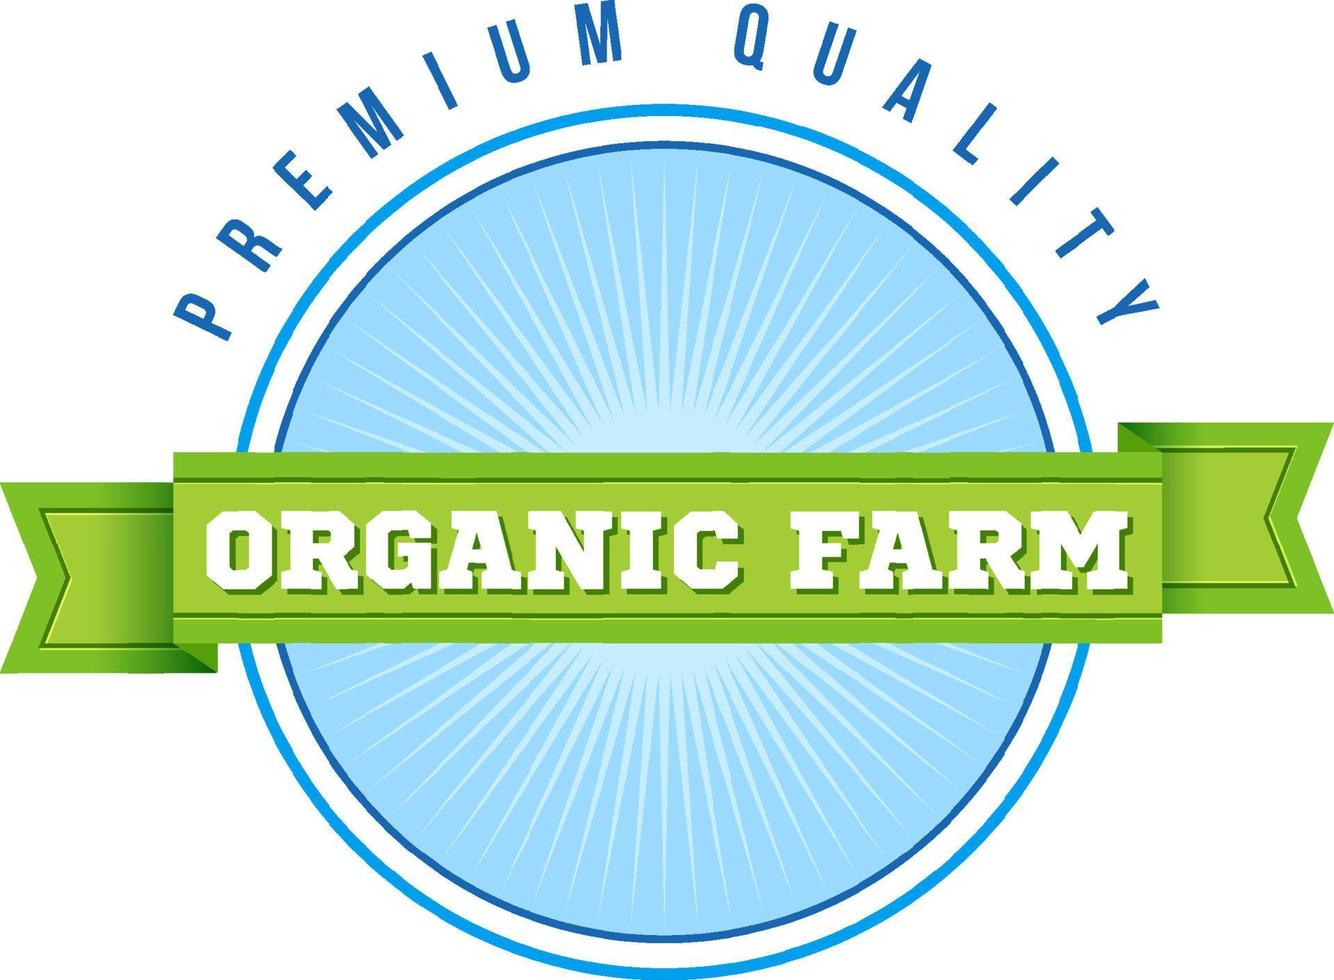 diseño de logotipo con palabras granja orgánica vector